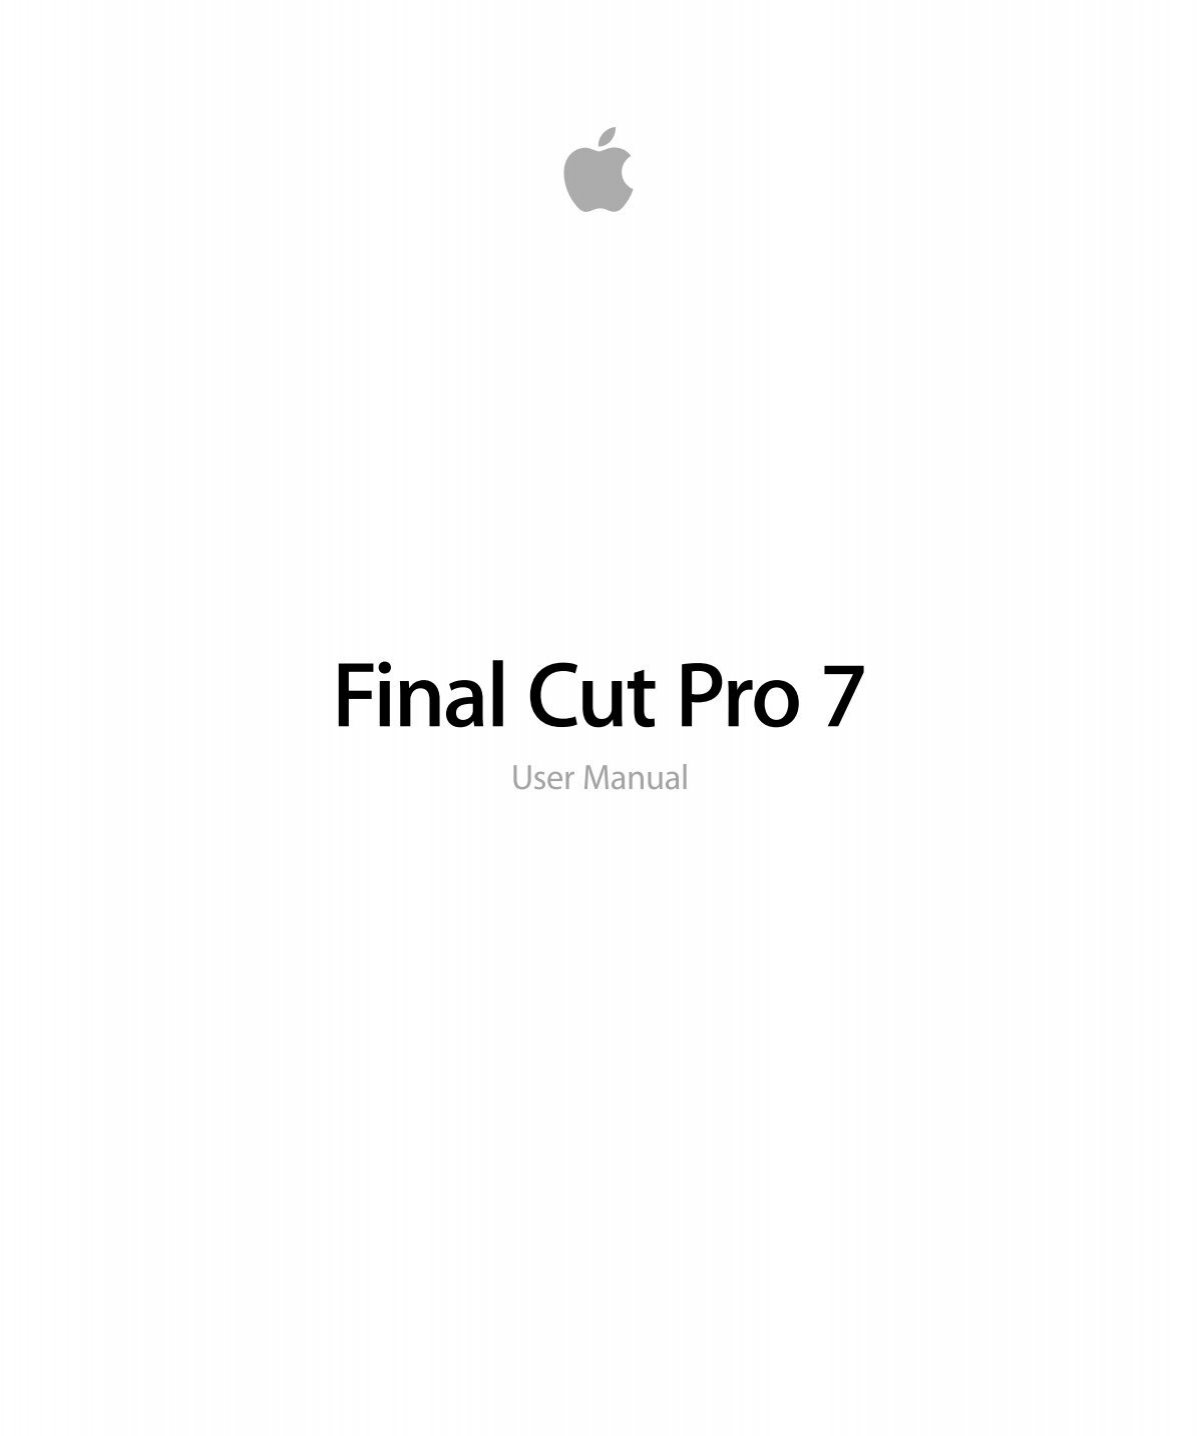 final cut pro 7 manual pdf free download